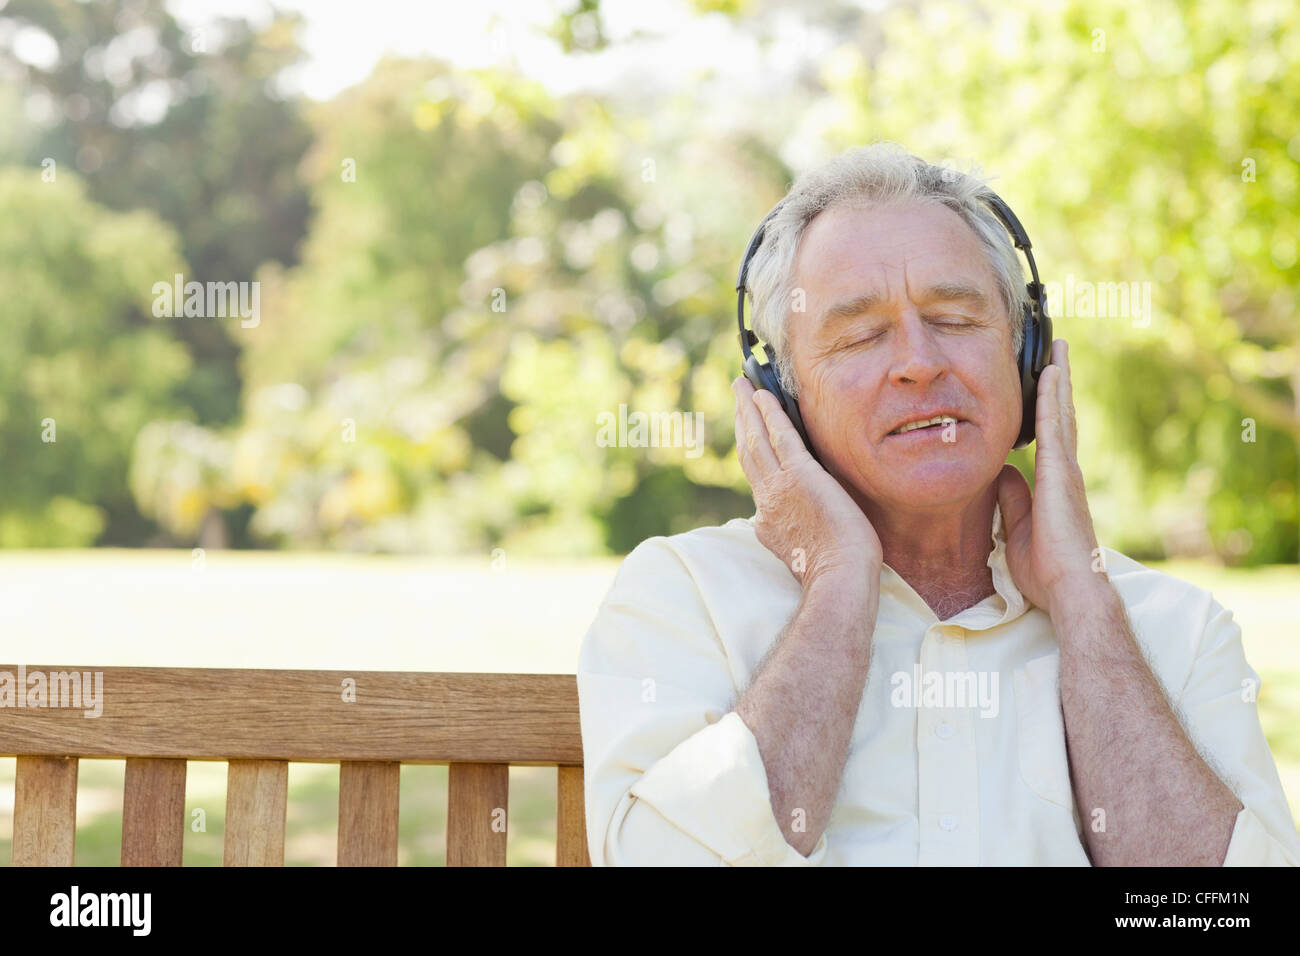 Man thoughtfully listennig to music Stock Photo